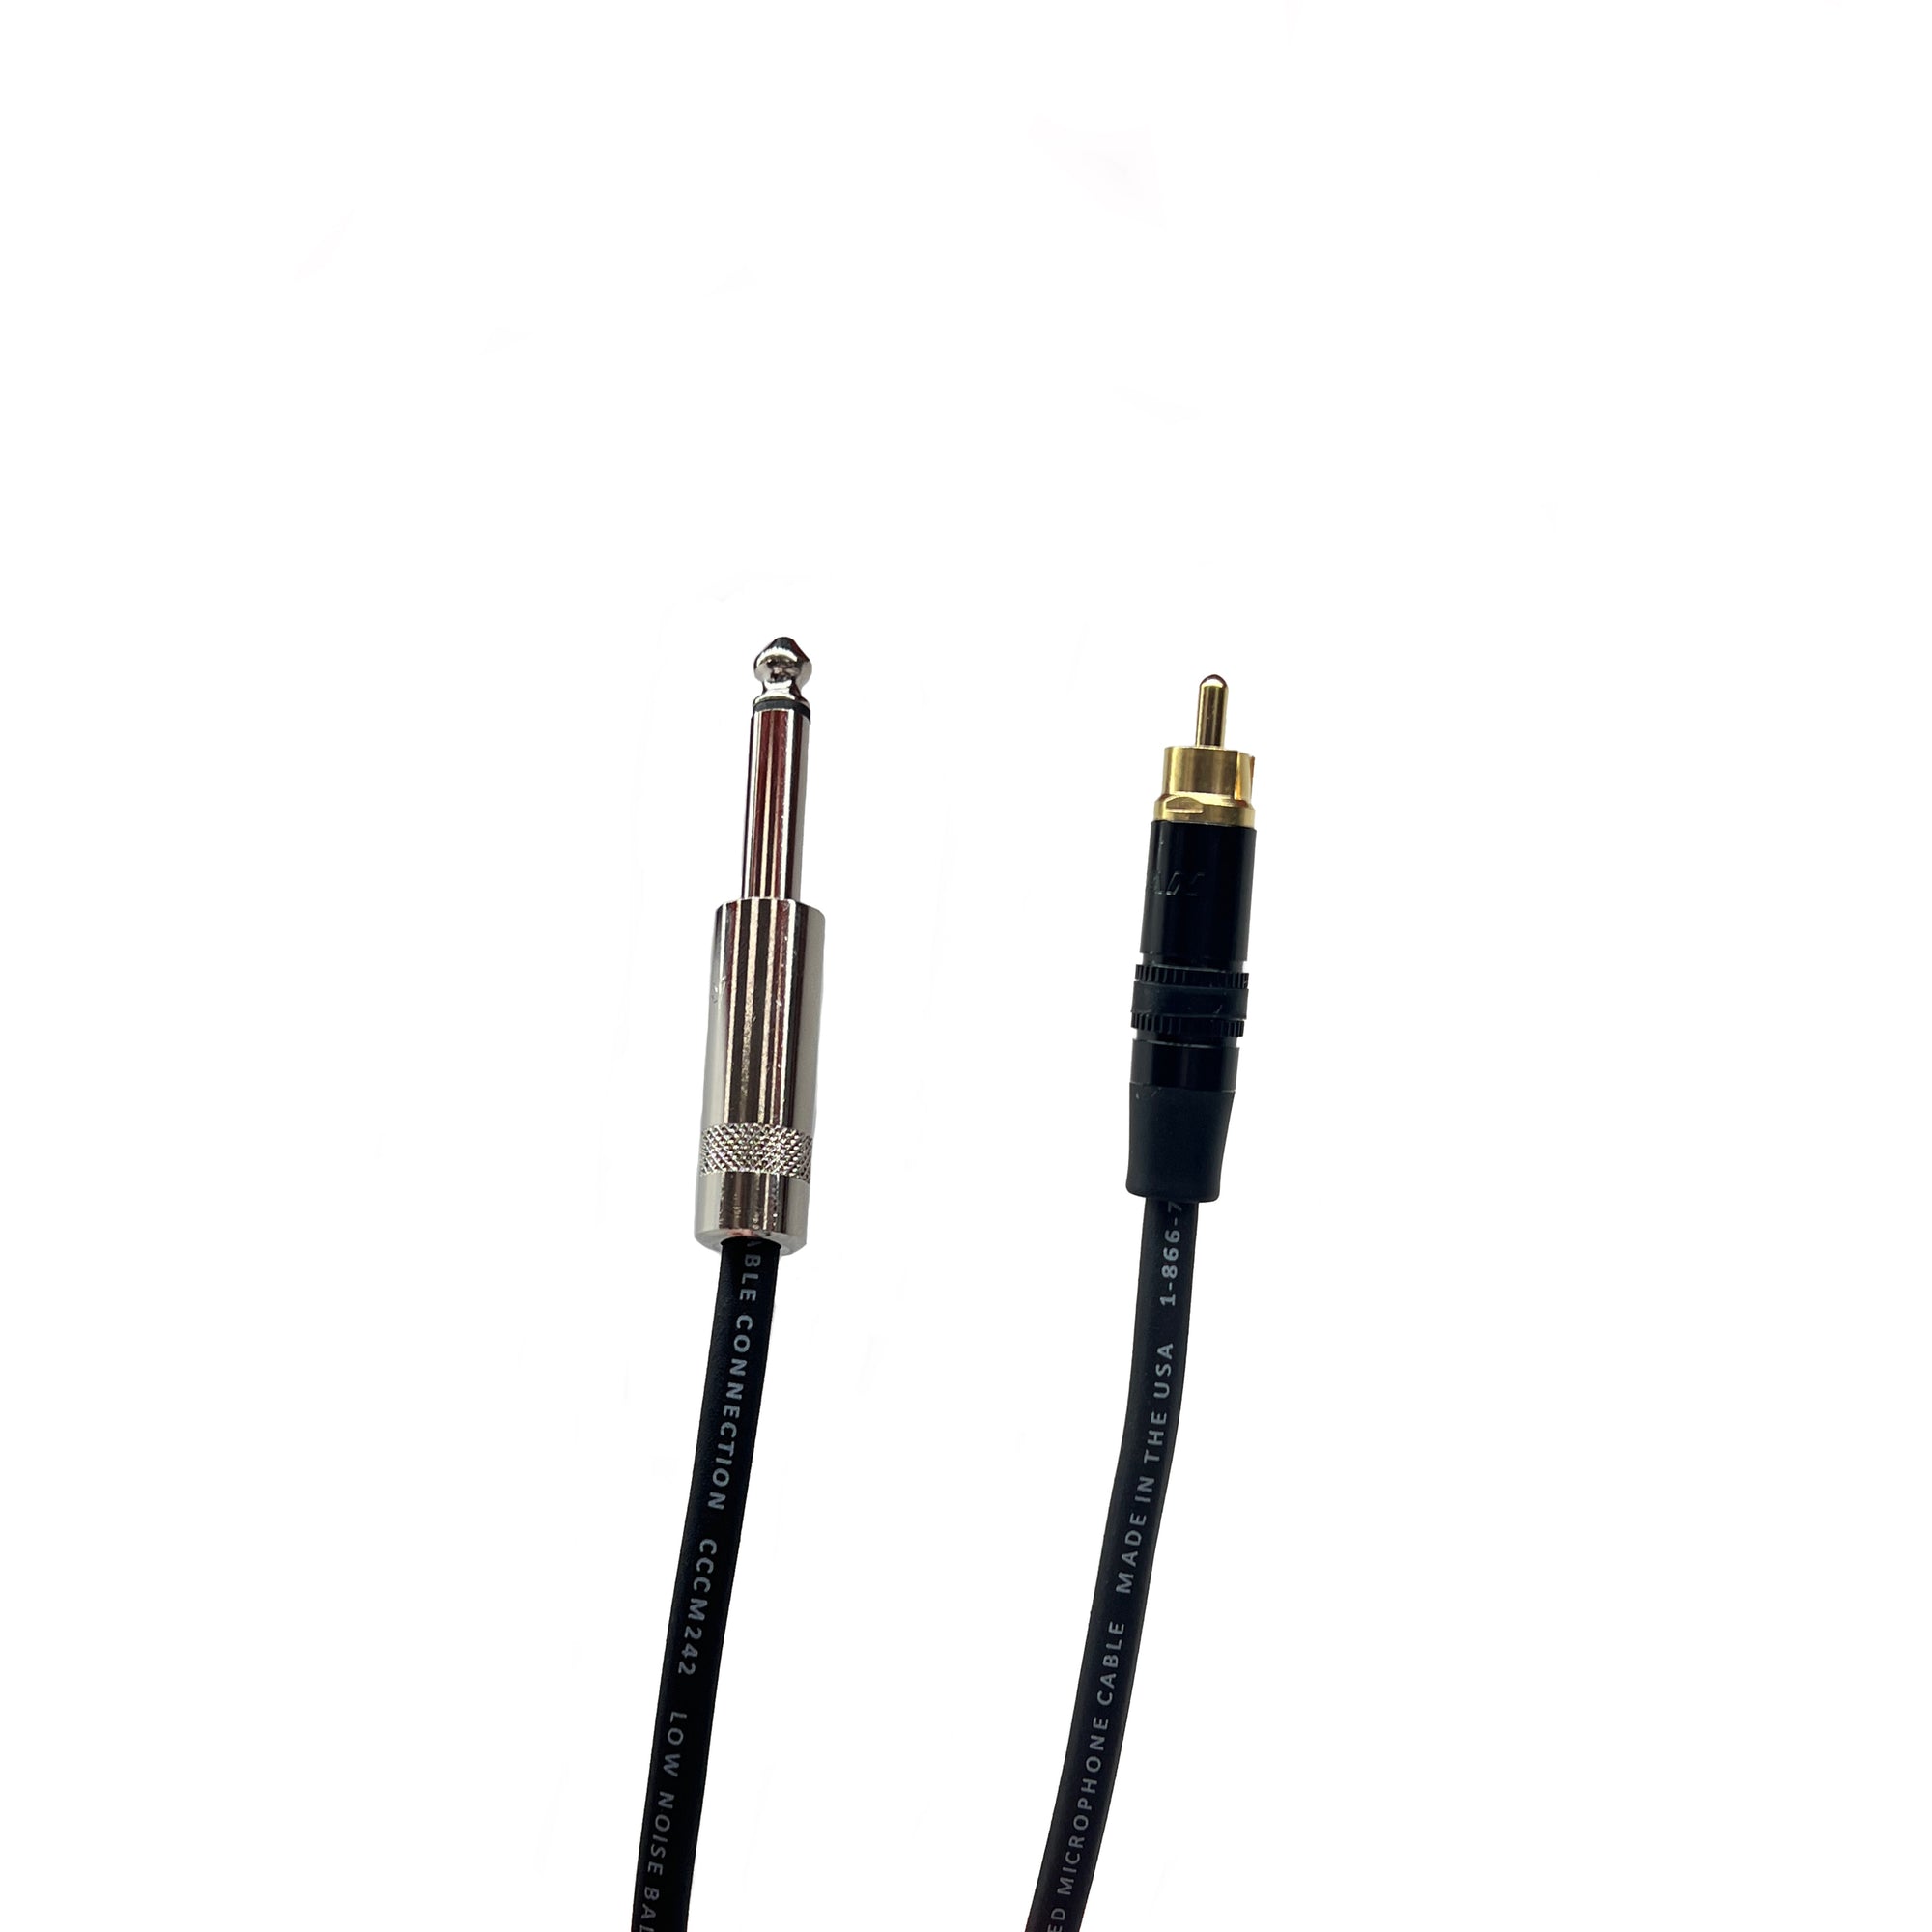 Pro Audio 1/4 inch Mono TS to RCA Male Cables